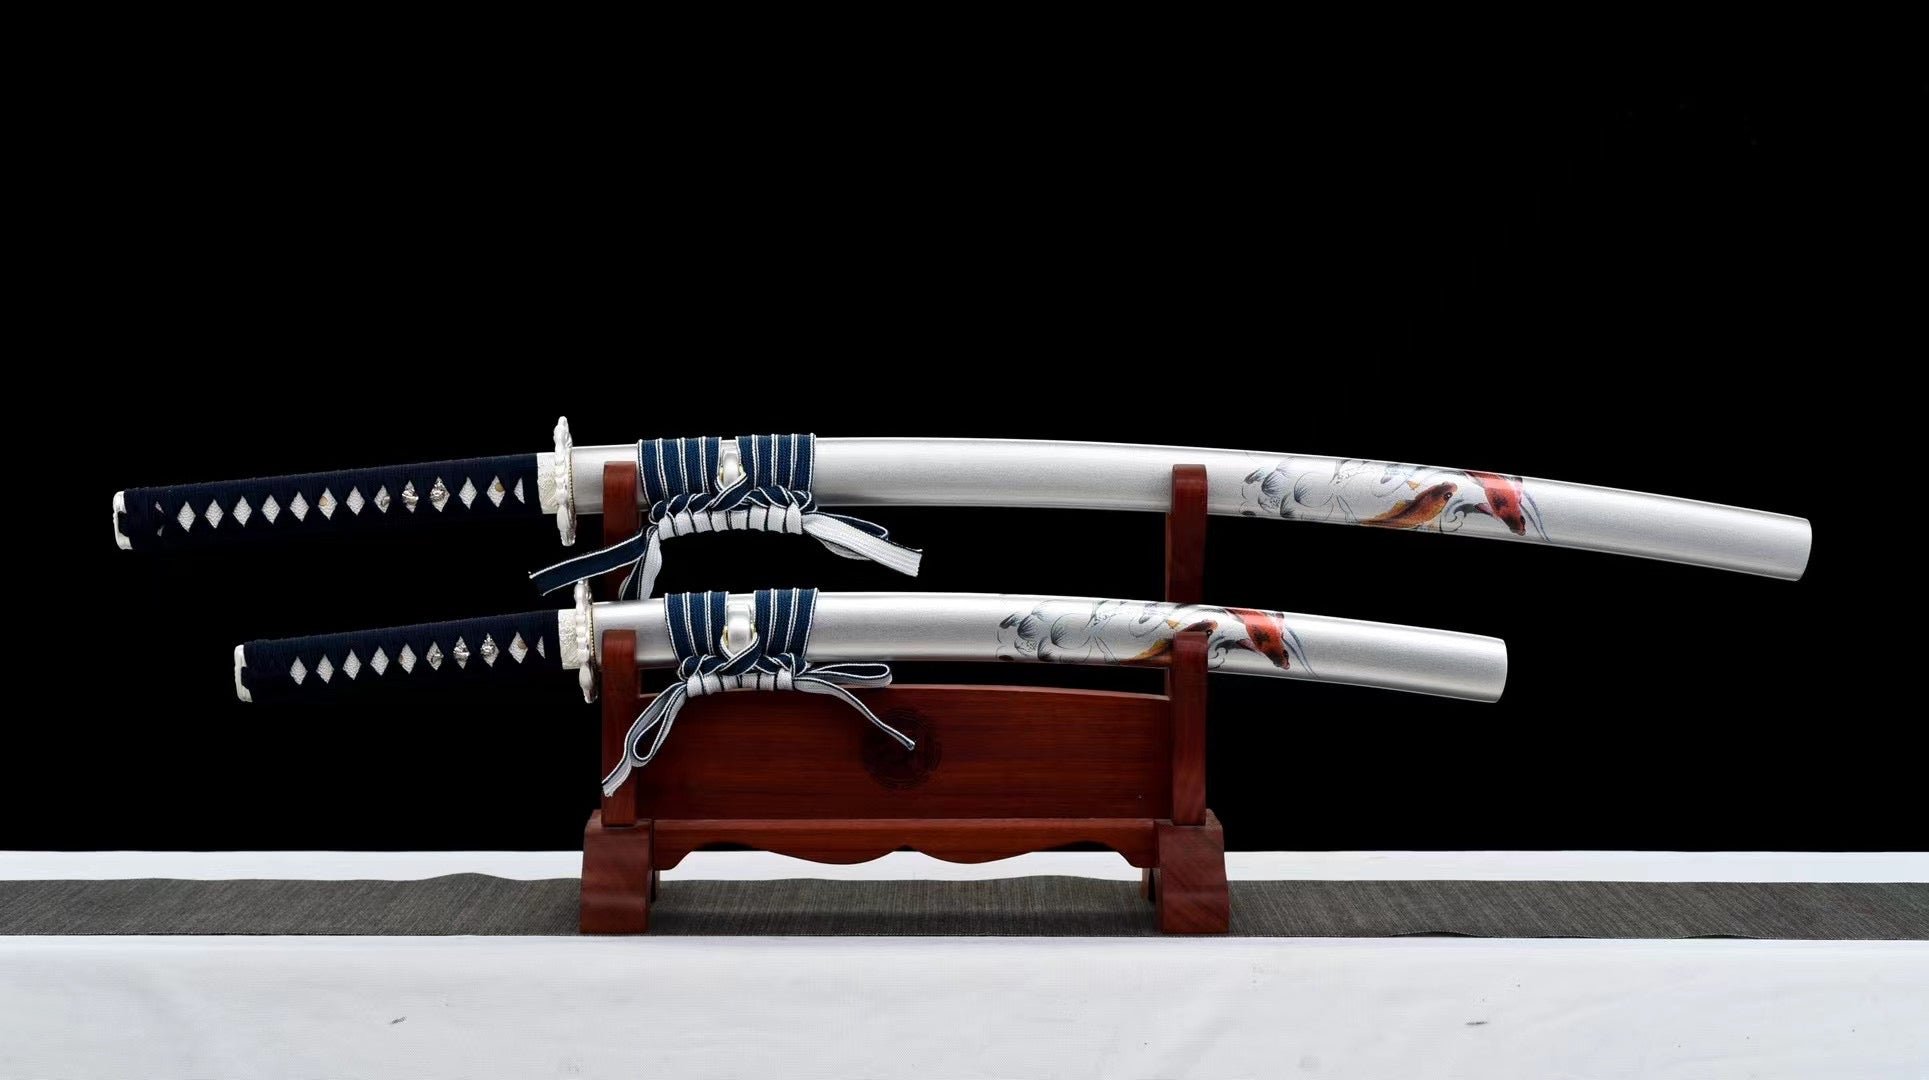 Koi Carp Katana Set, Katana, and Wakizashi Sword,Japanese Samurai Sword,Real Katana,Handmade sword,T10 Steel Clay Tempered With Hamon